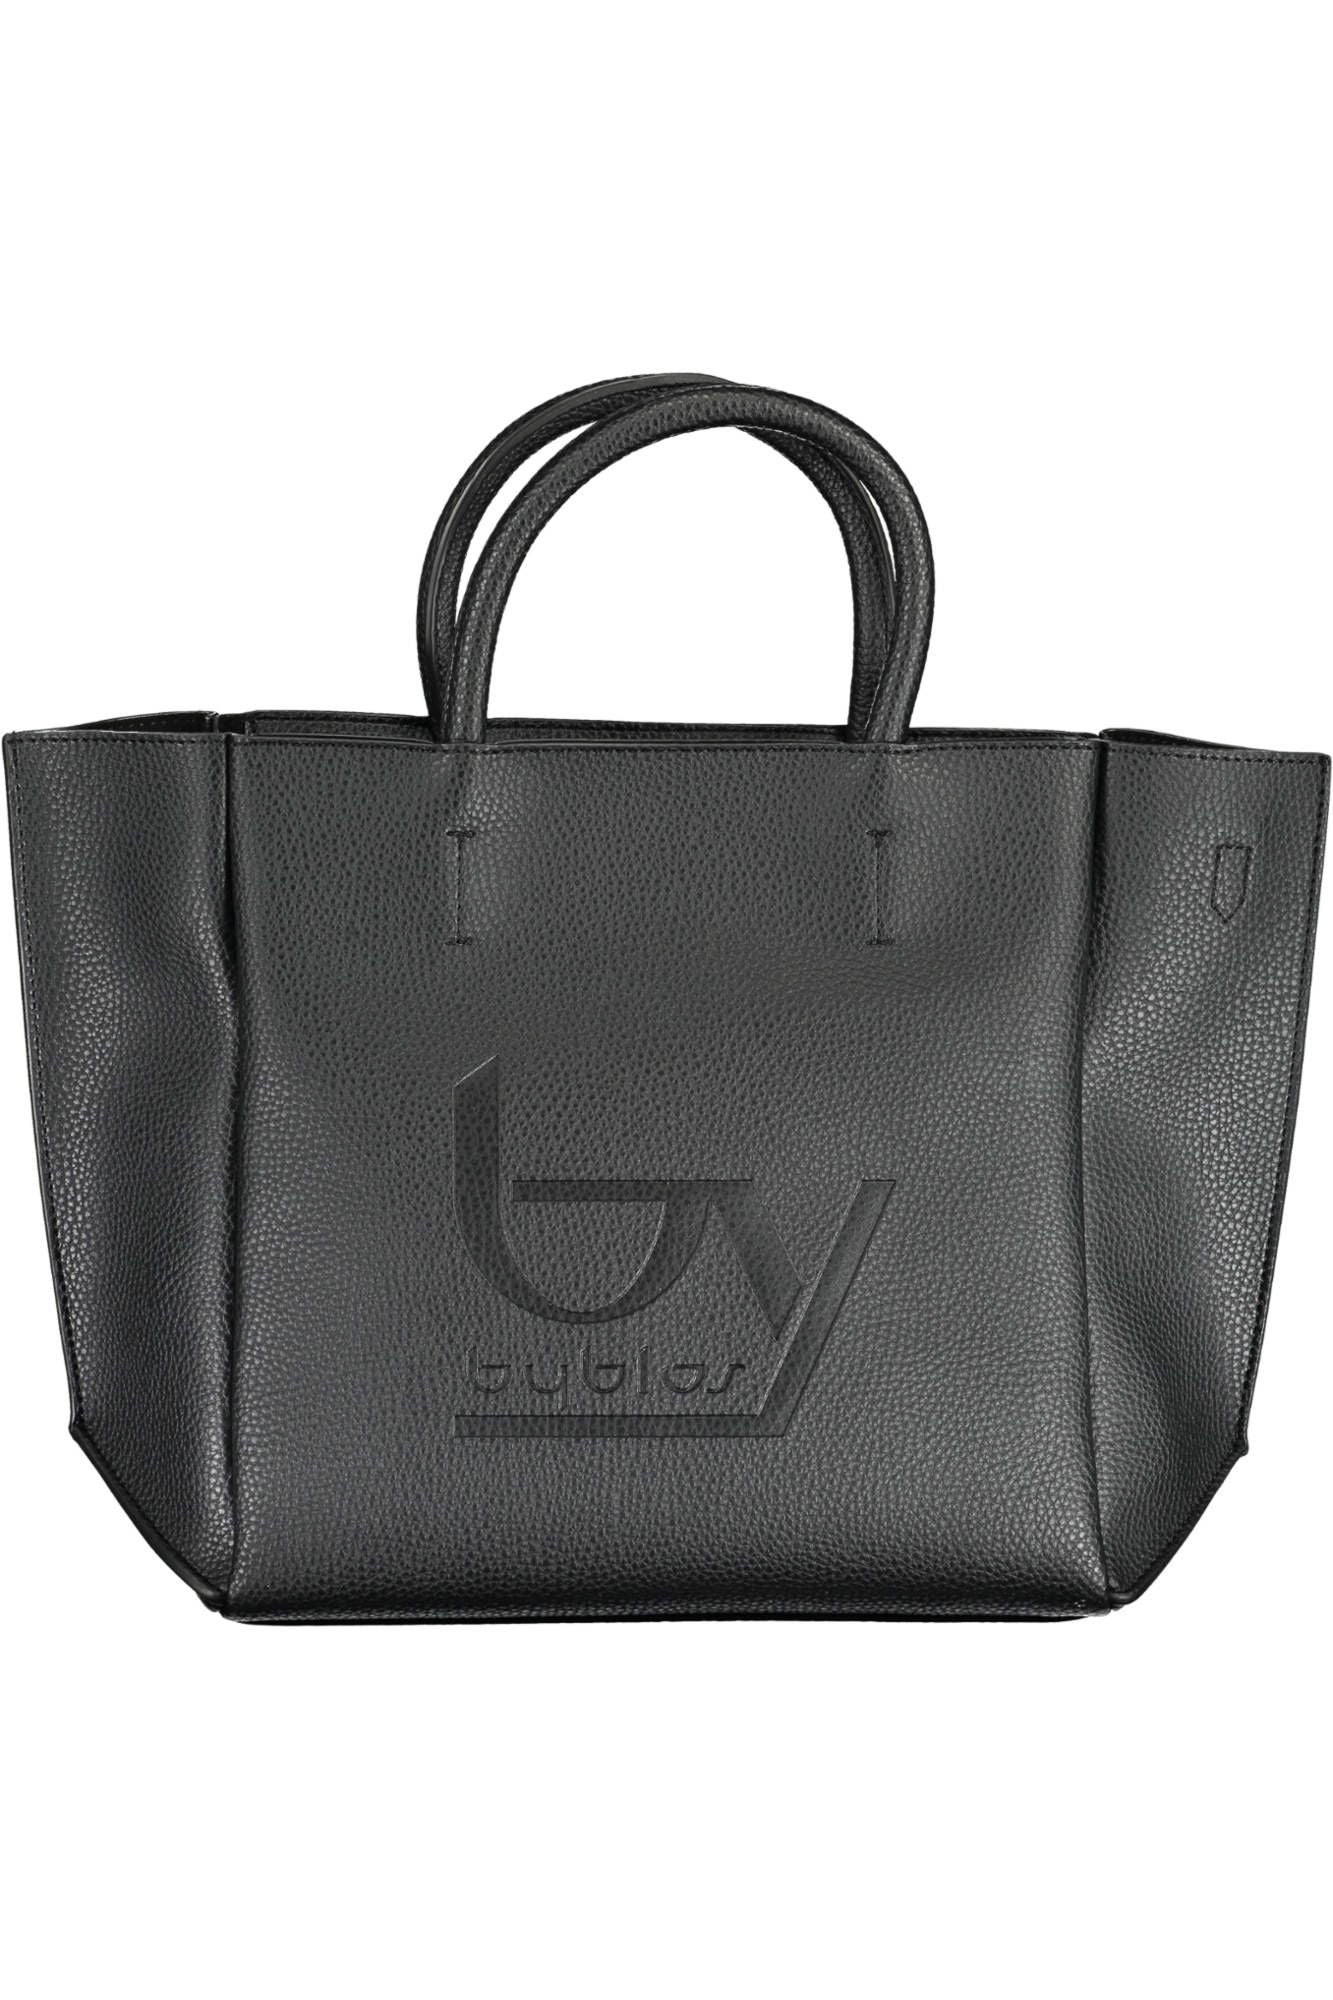 BYBLOS Elegant Black Handbag with Chic Print